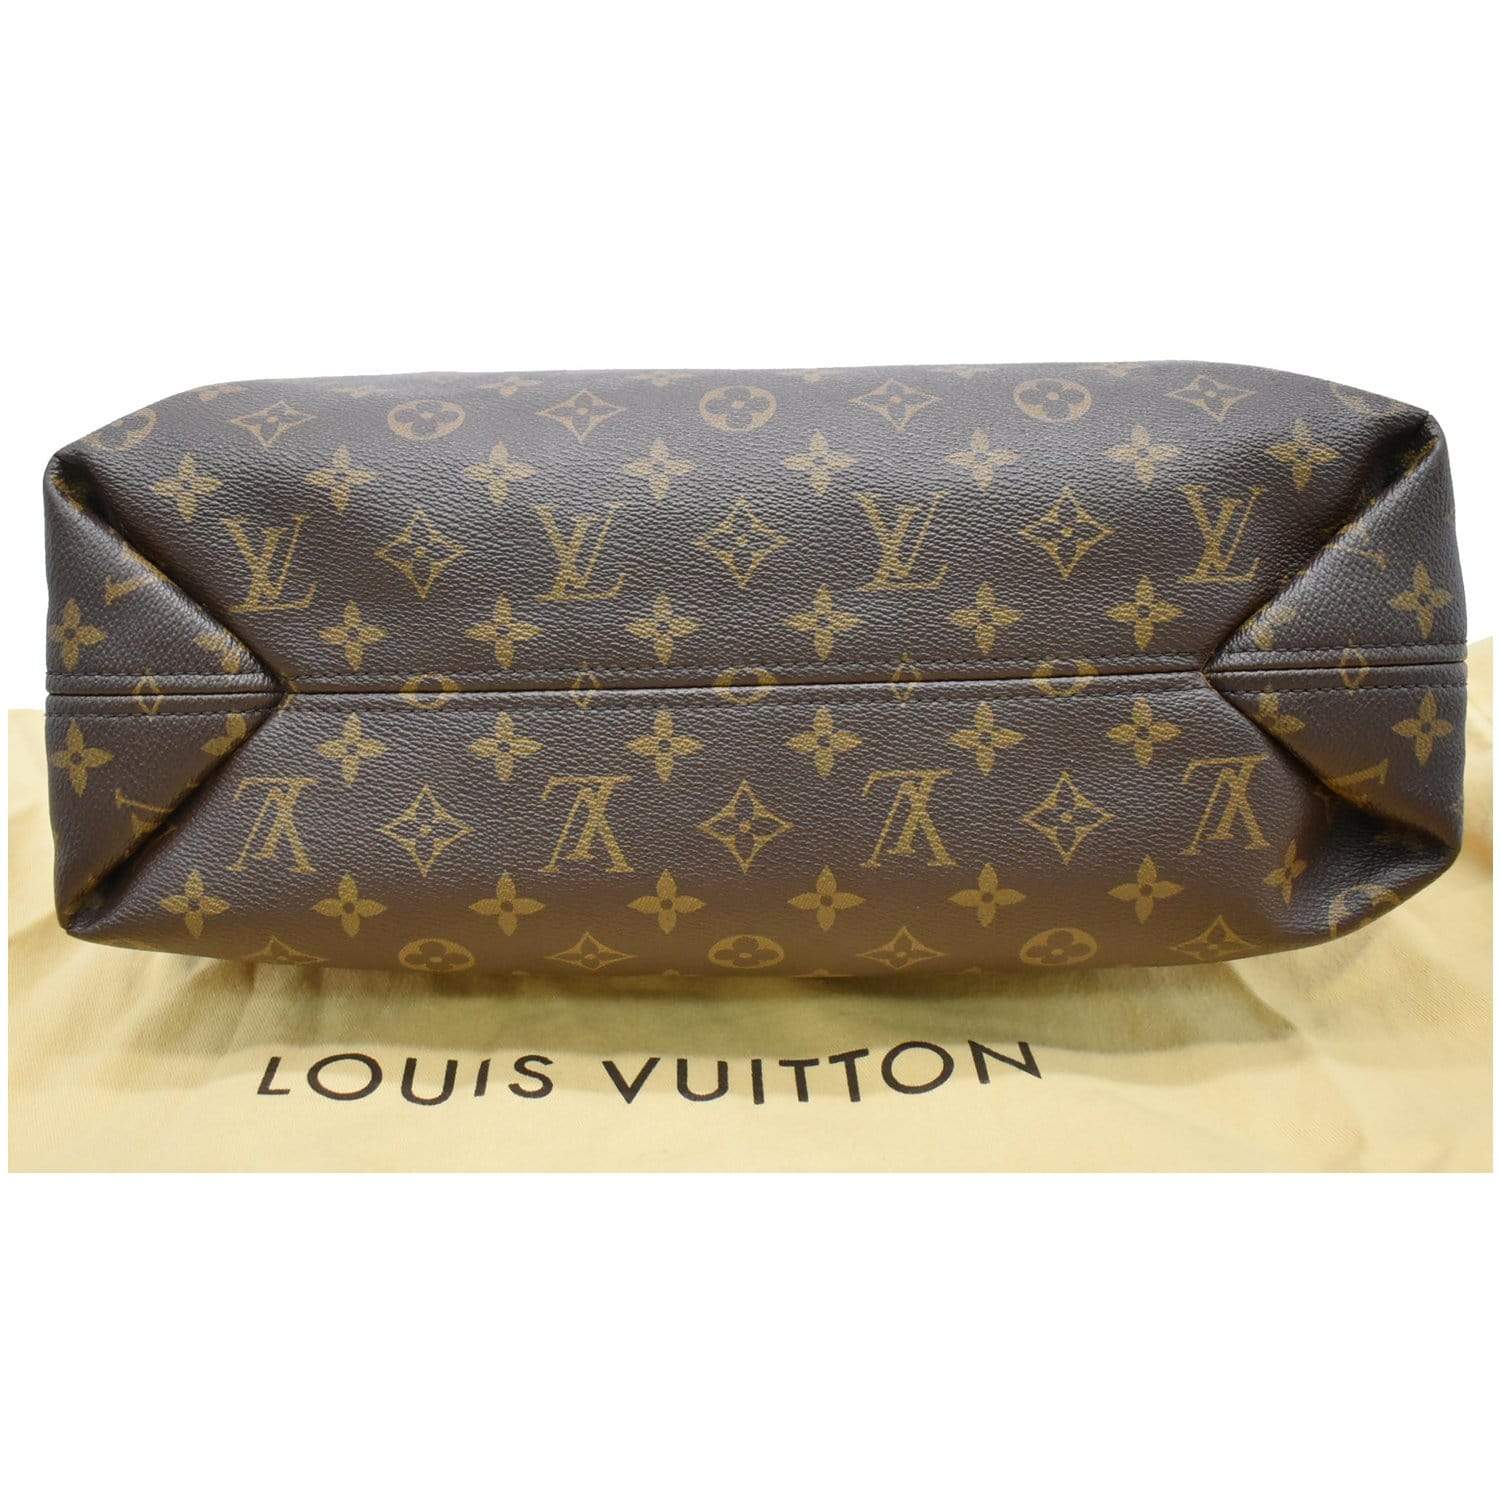 SOLD!! $9️⃣9️⃣5️⃣ Louis Vuitton SULLY MM Shoulder bag in